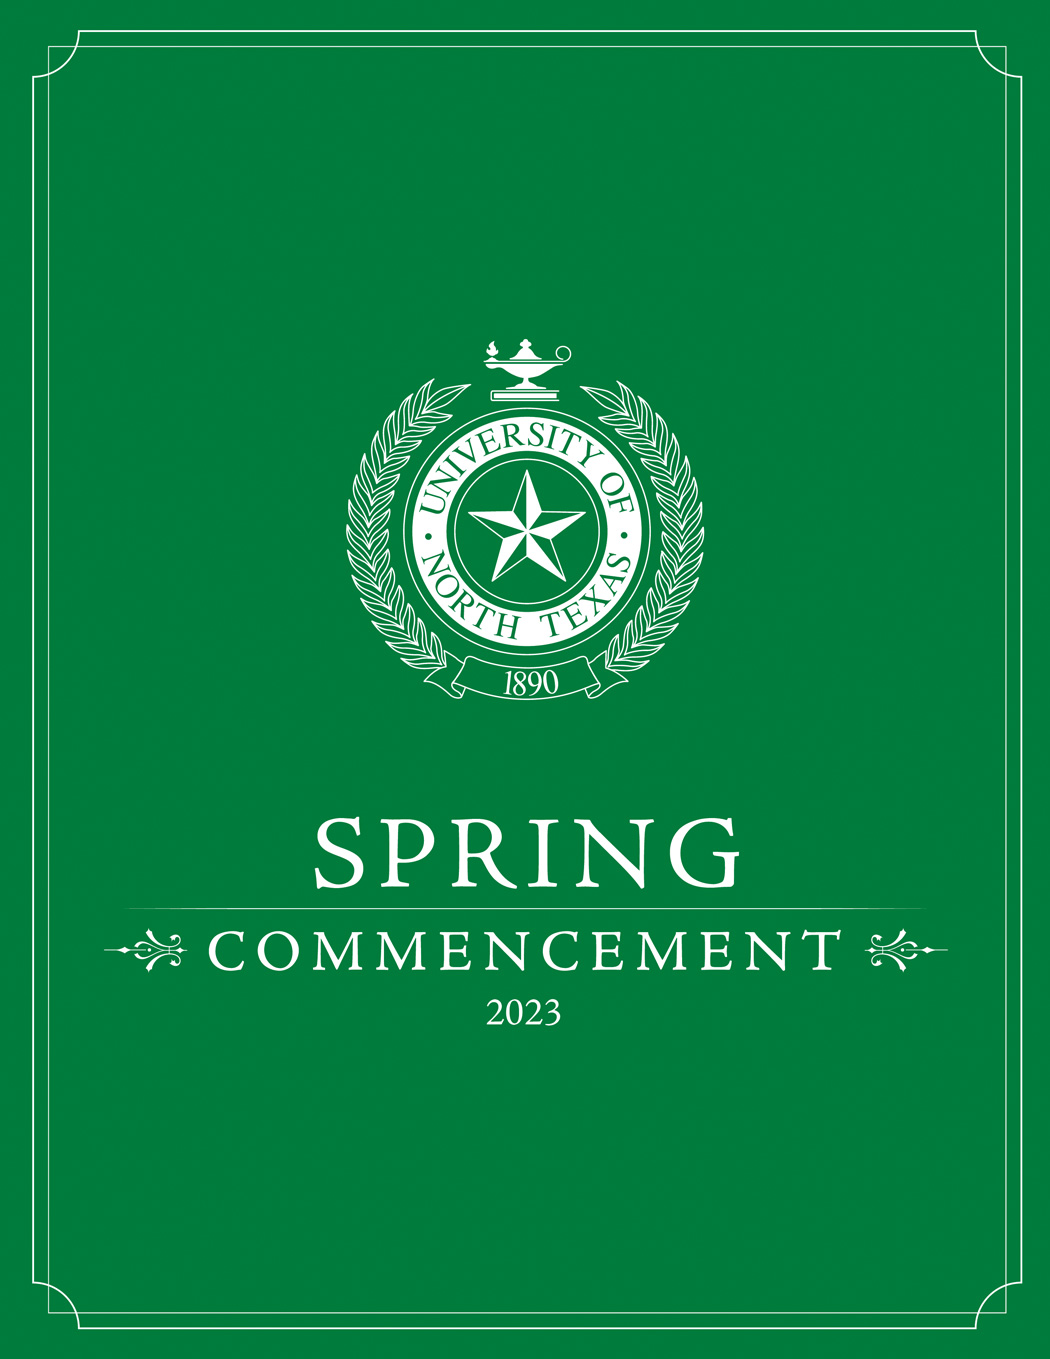 Spring 2023 Commencement program cover